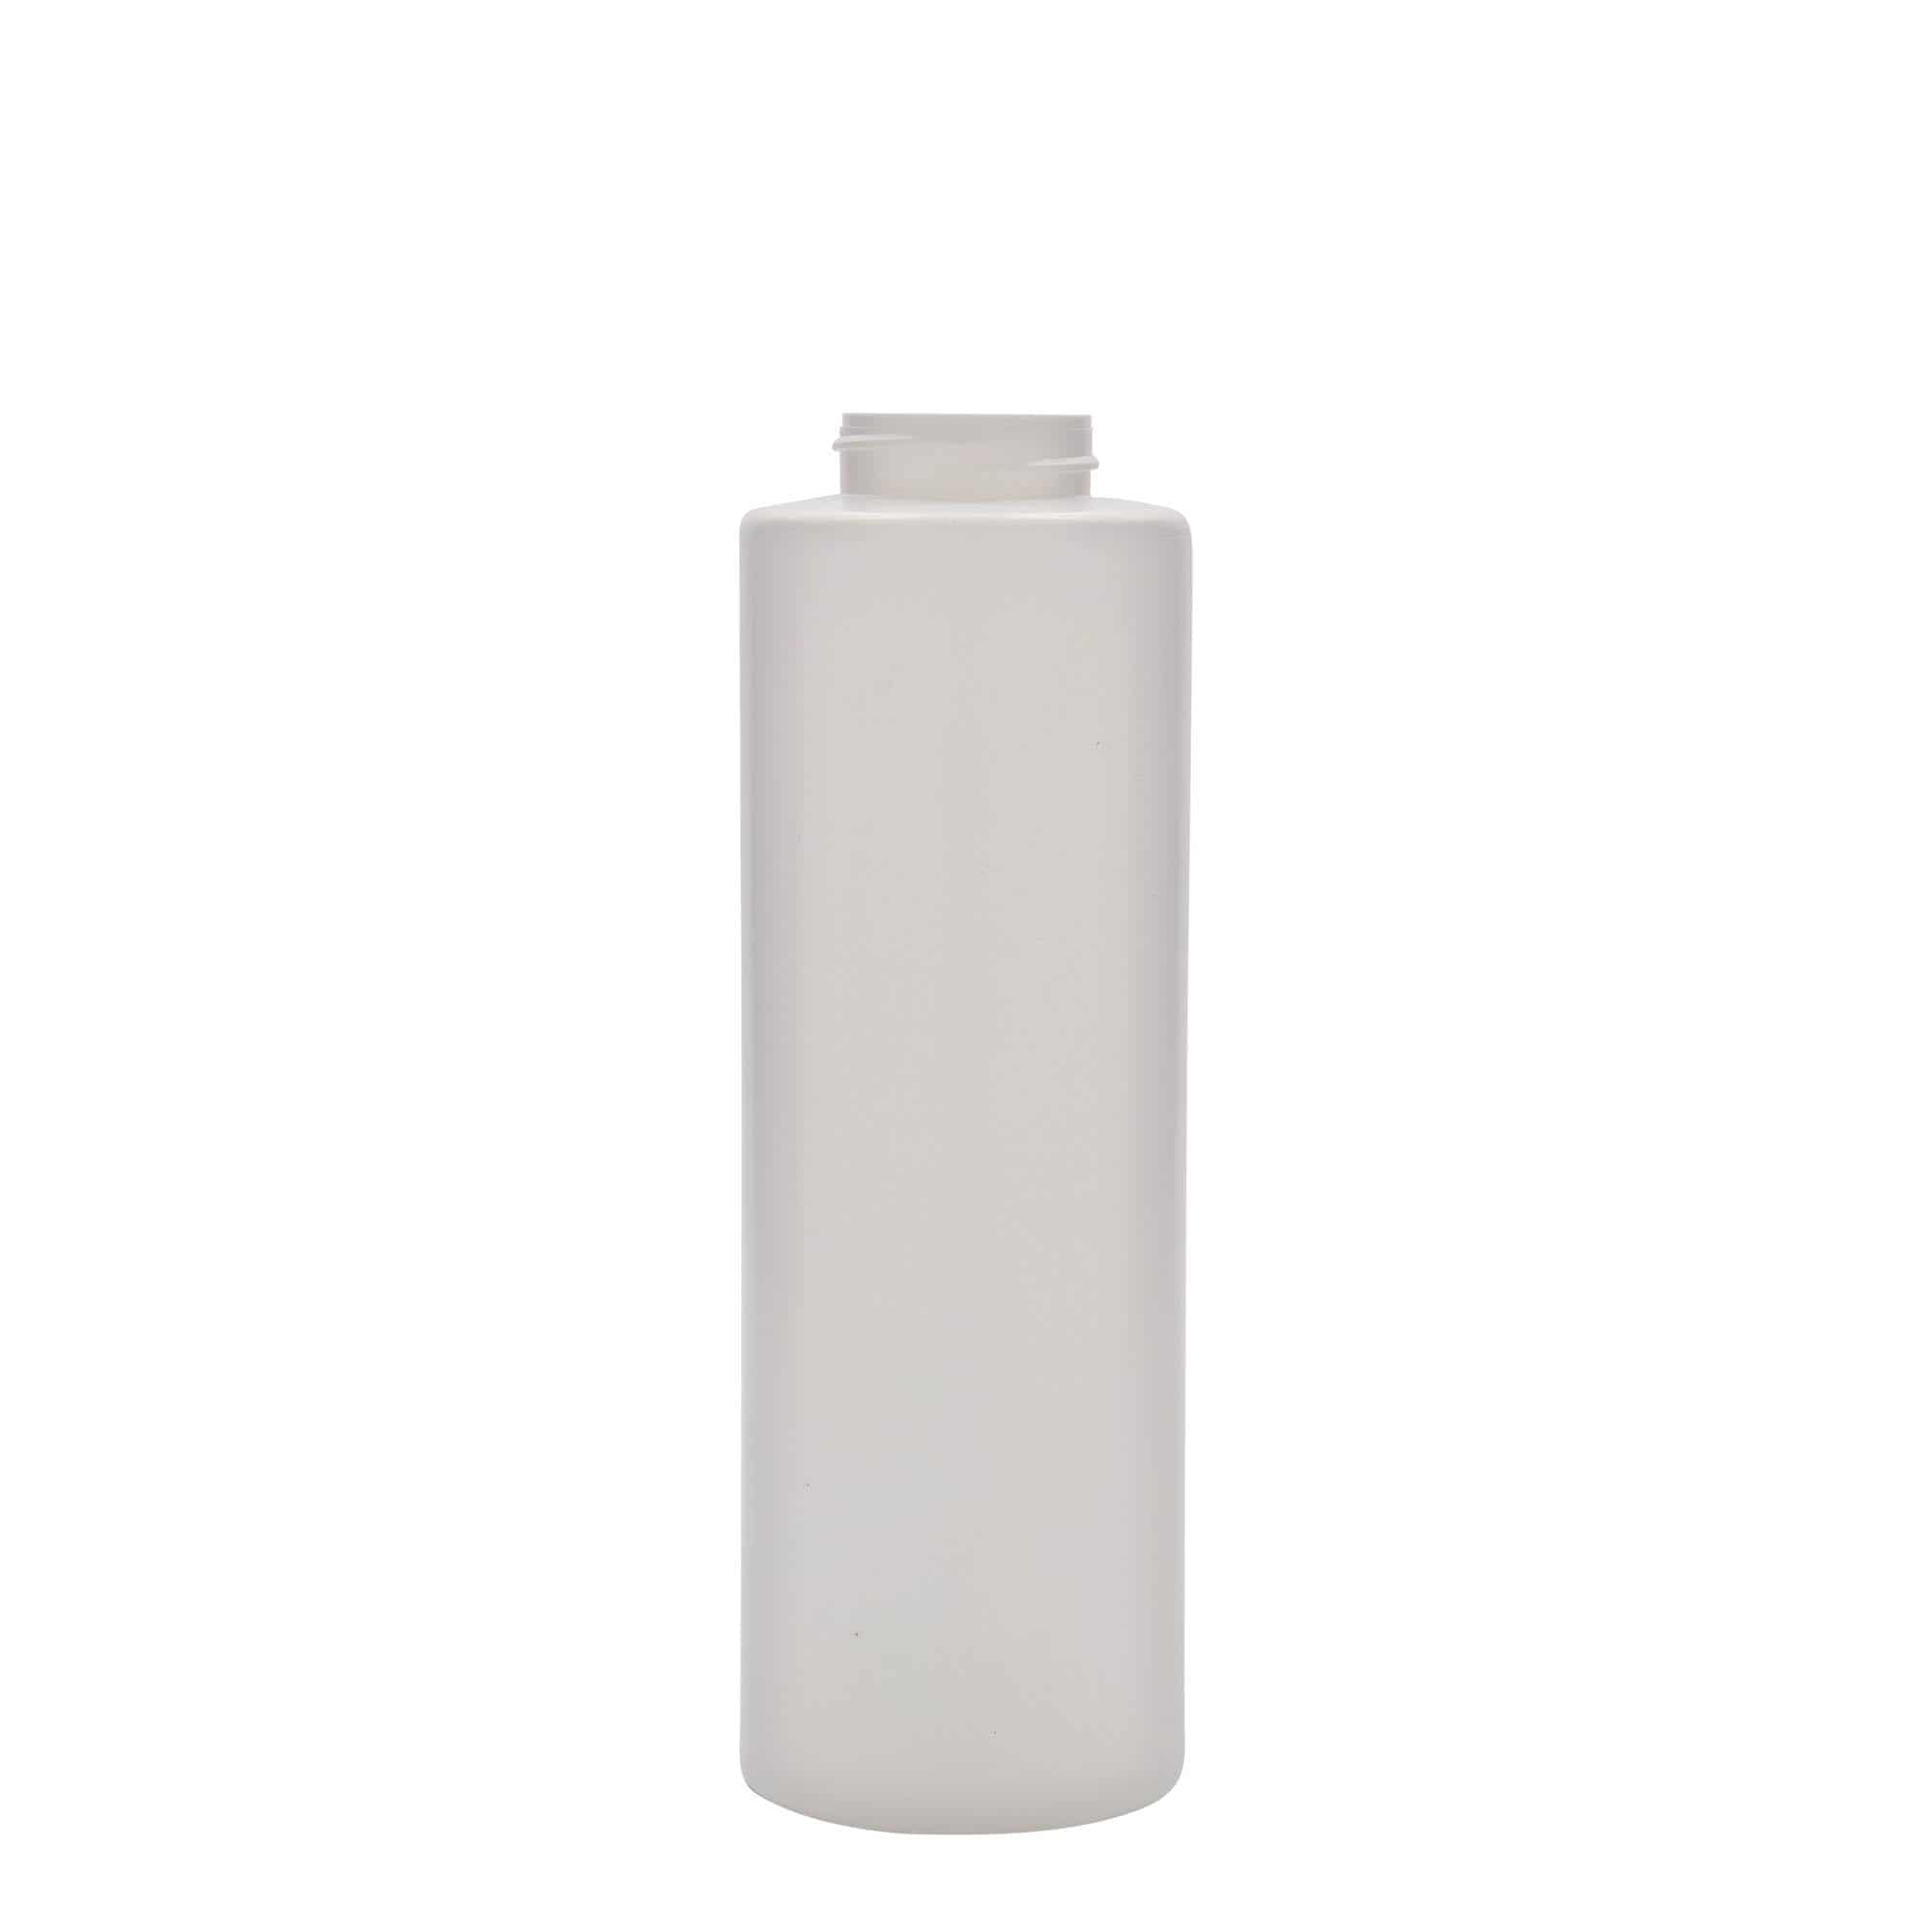 500 ml condiment bottle, LDPE plastic, white, closure: GPI 38/400